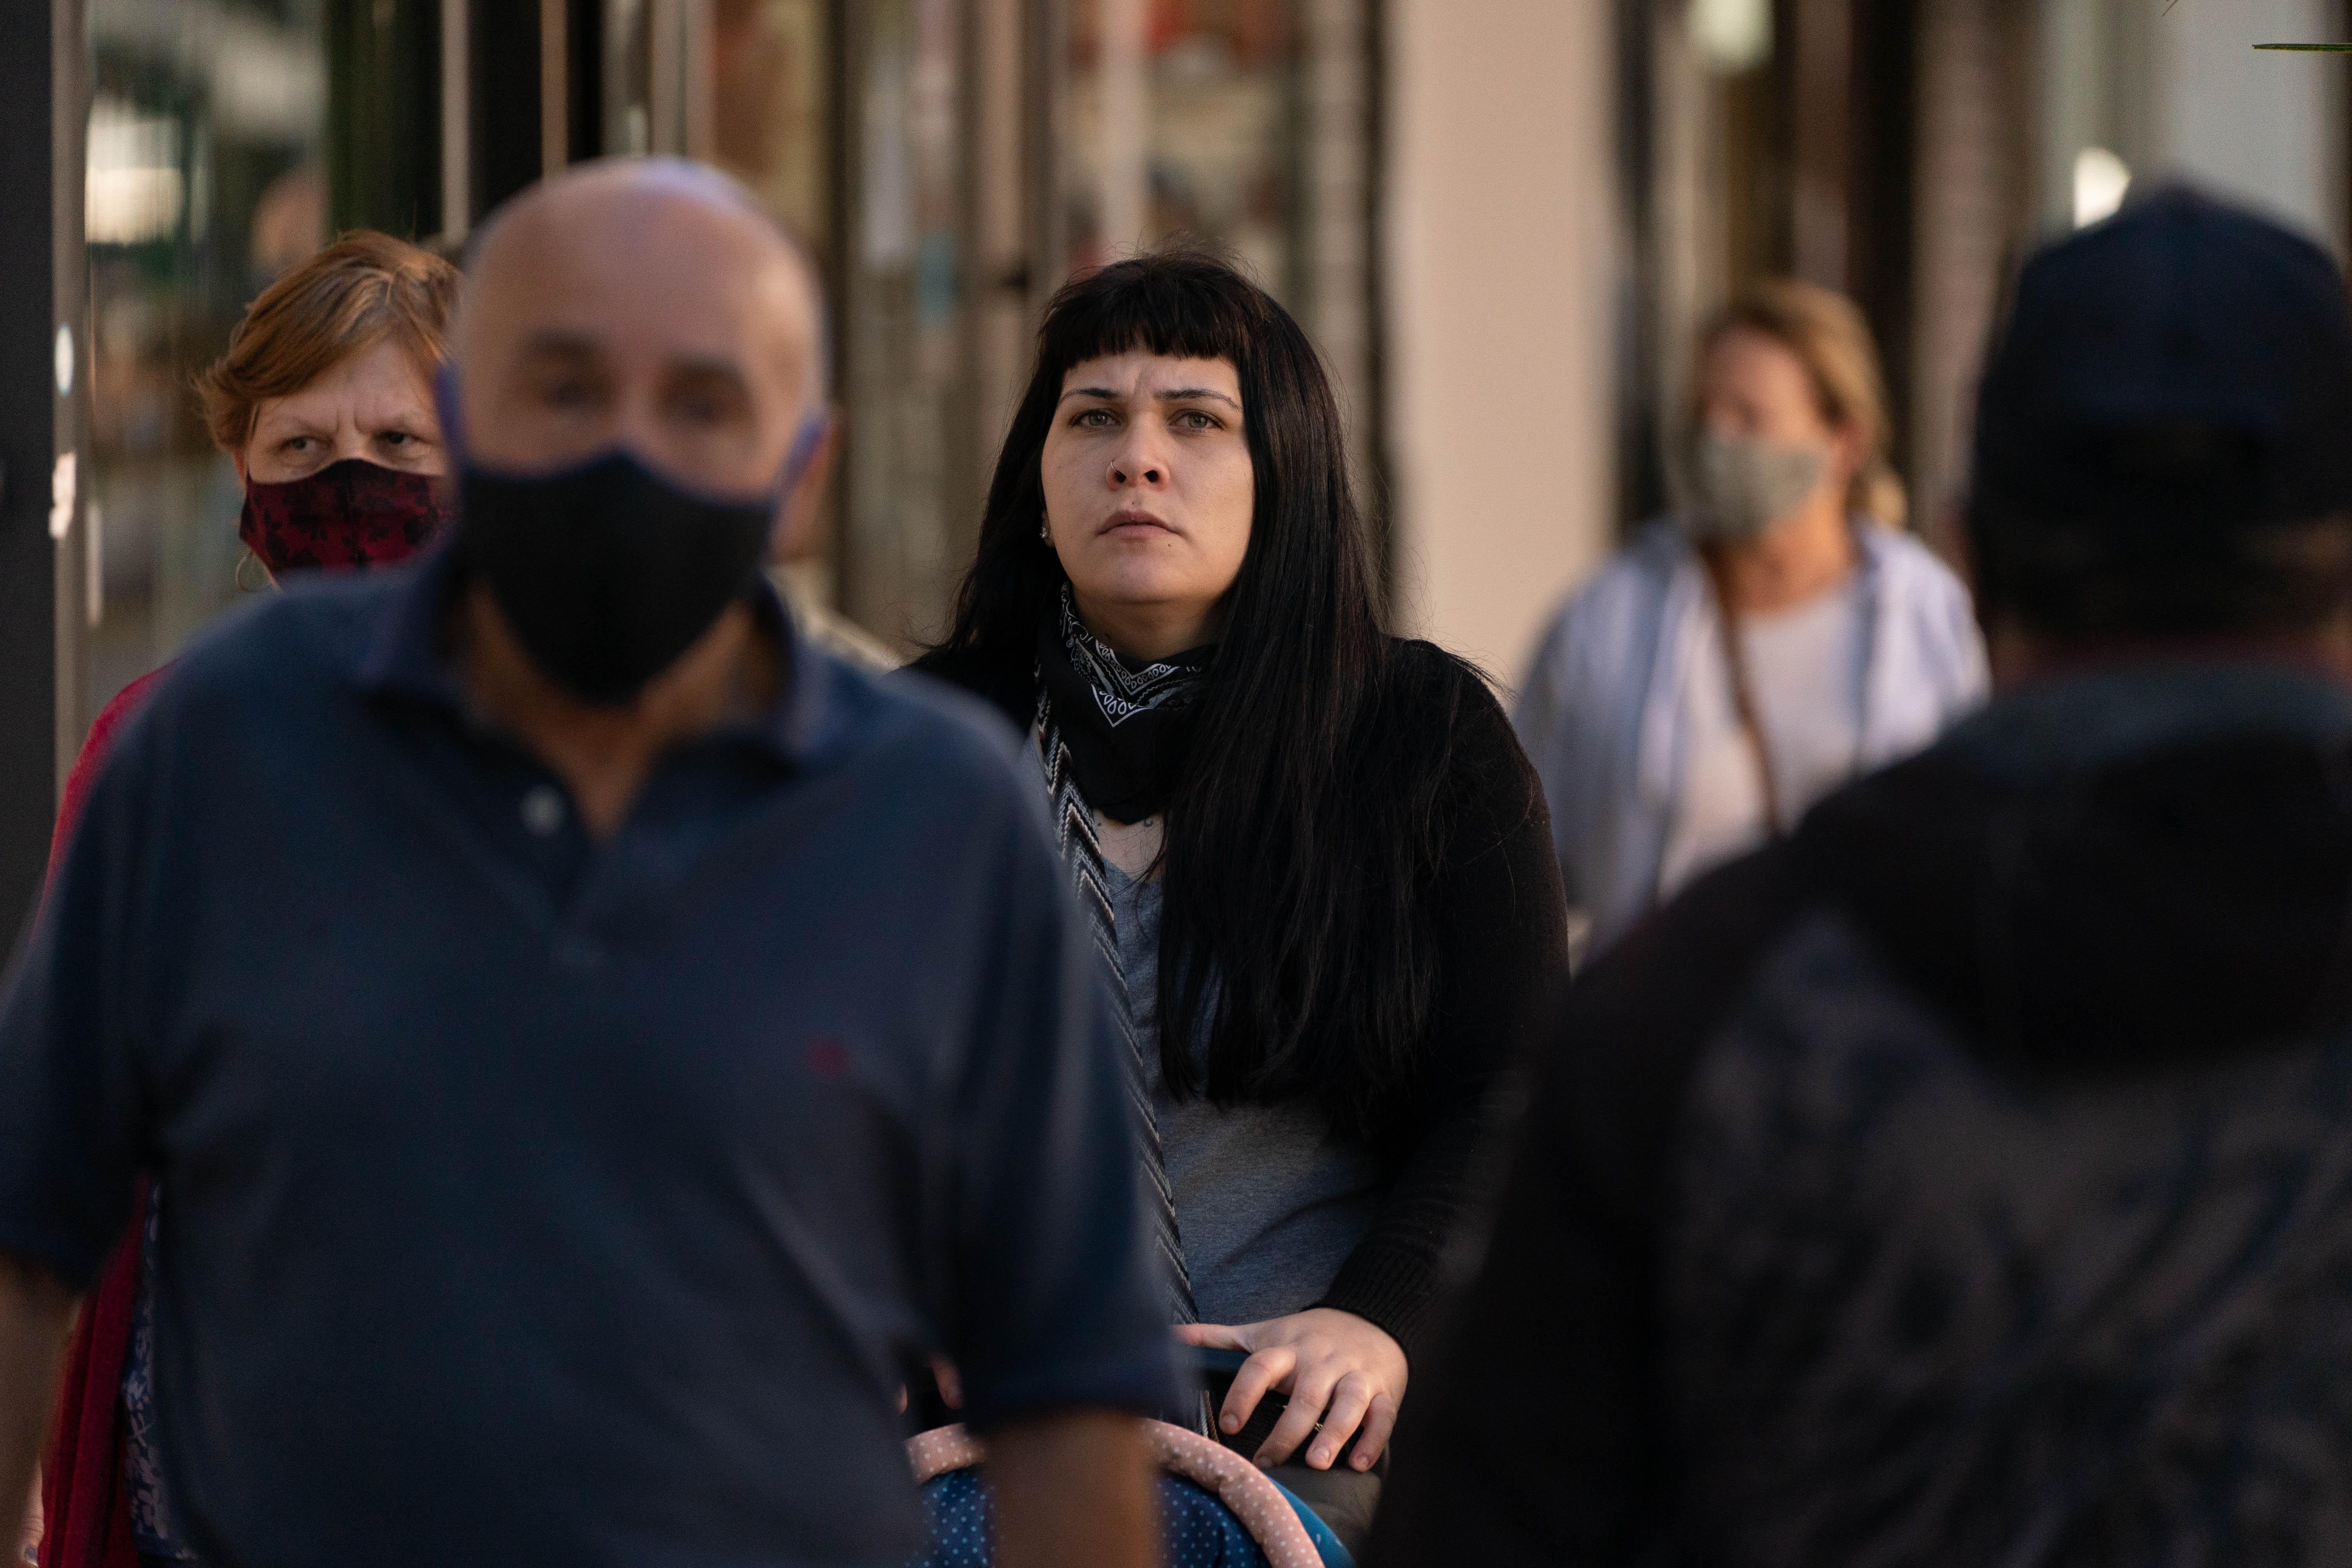 Gente sin barbijos - COVID-19 - Coronavirus - Segunda ola - San Fernando - Buenos Aires, Argentina